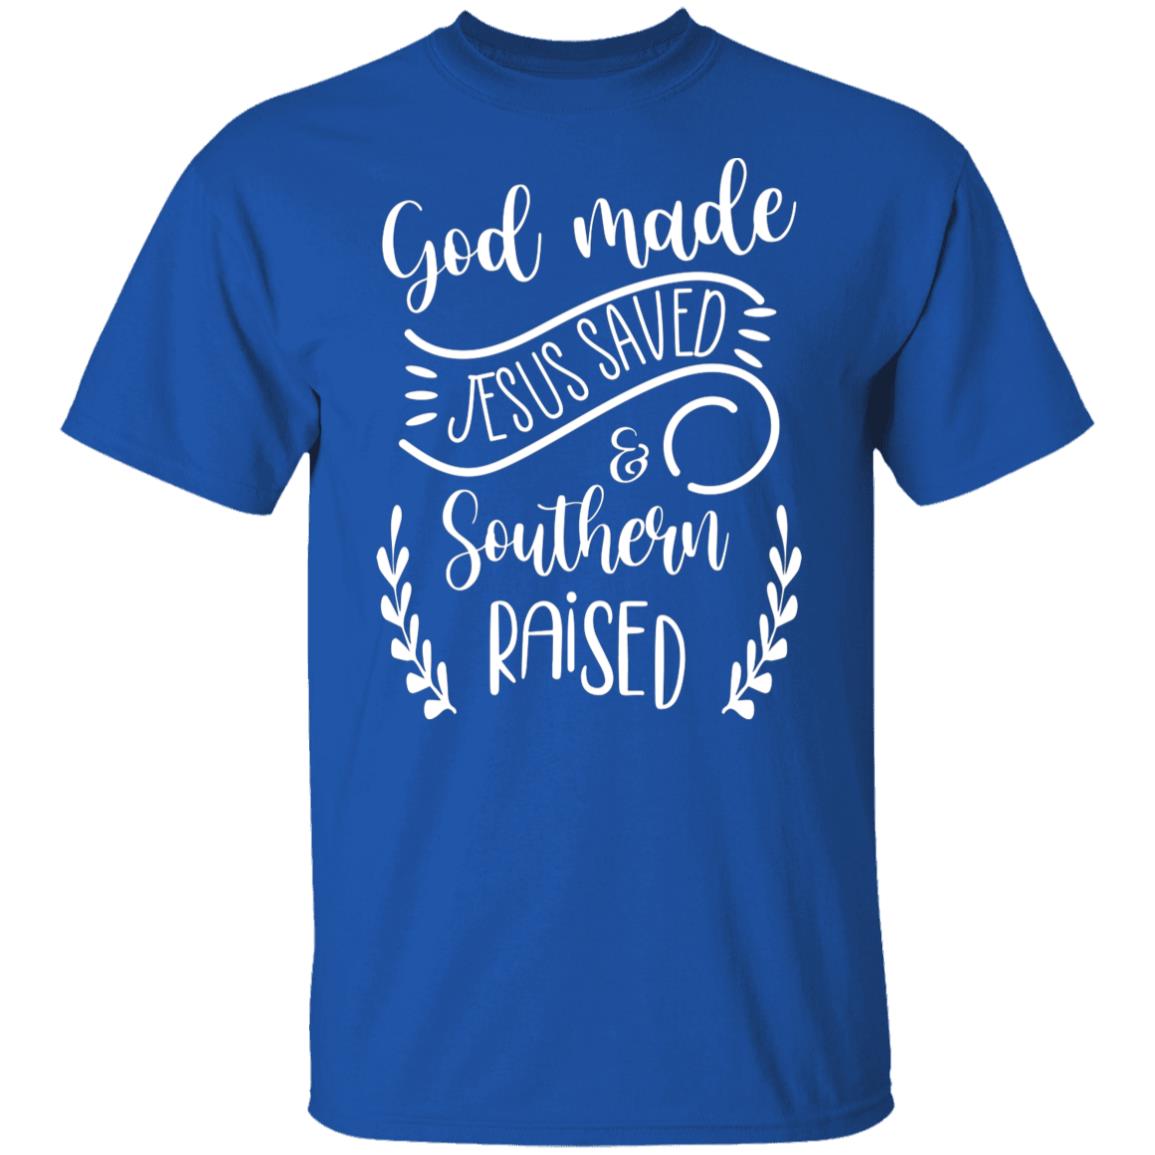 God Made Jesus Saved and Southern Raised Tshirt